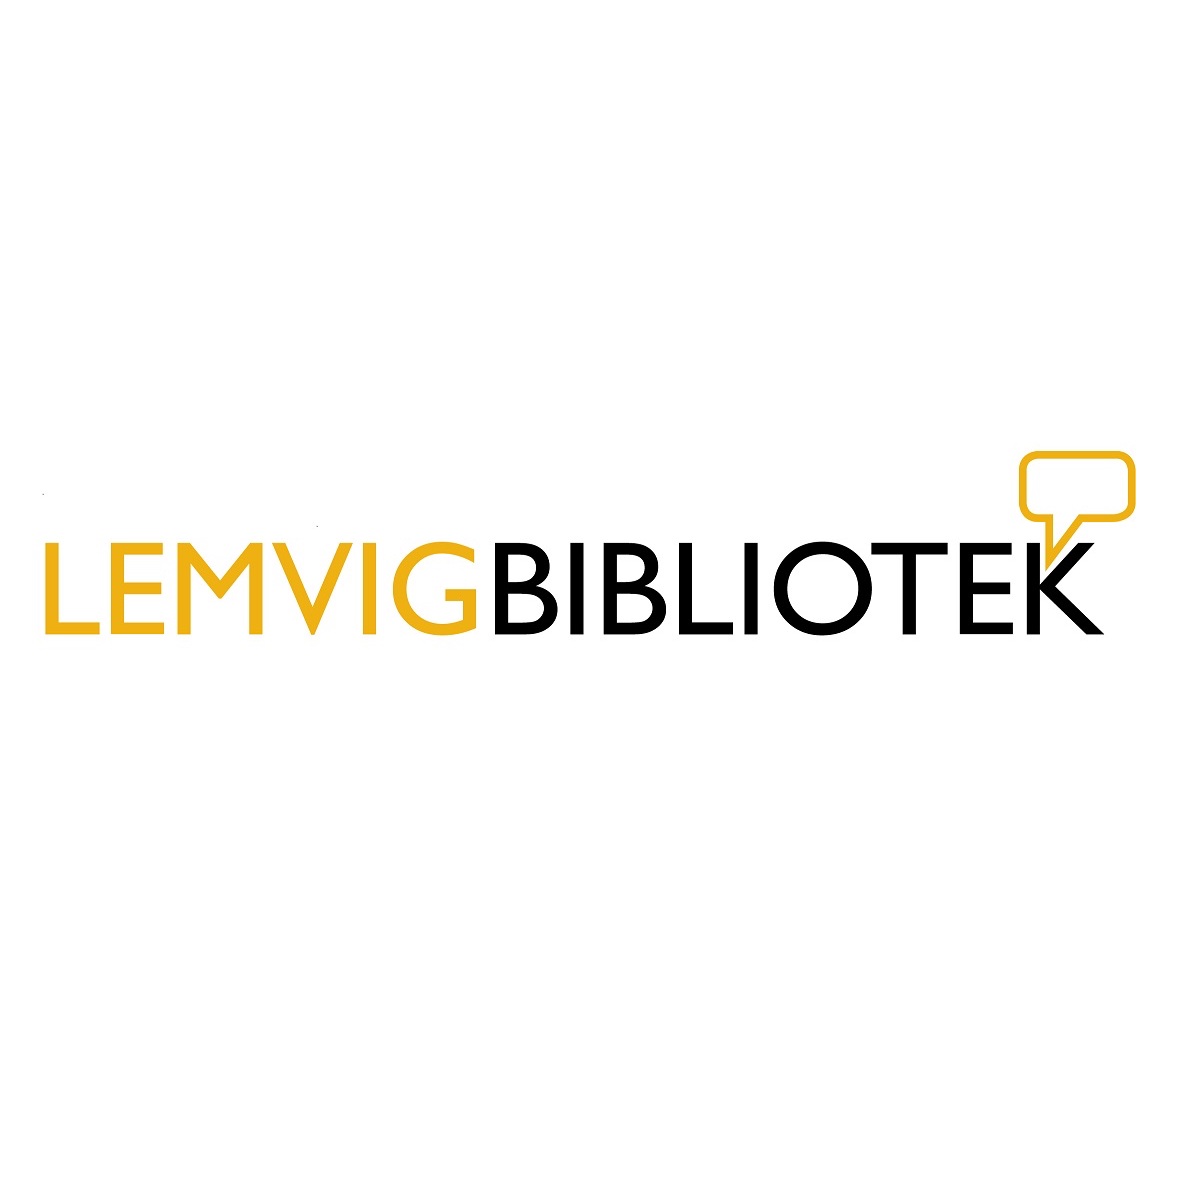 Lemvig Bibliotek